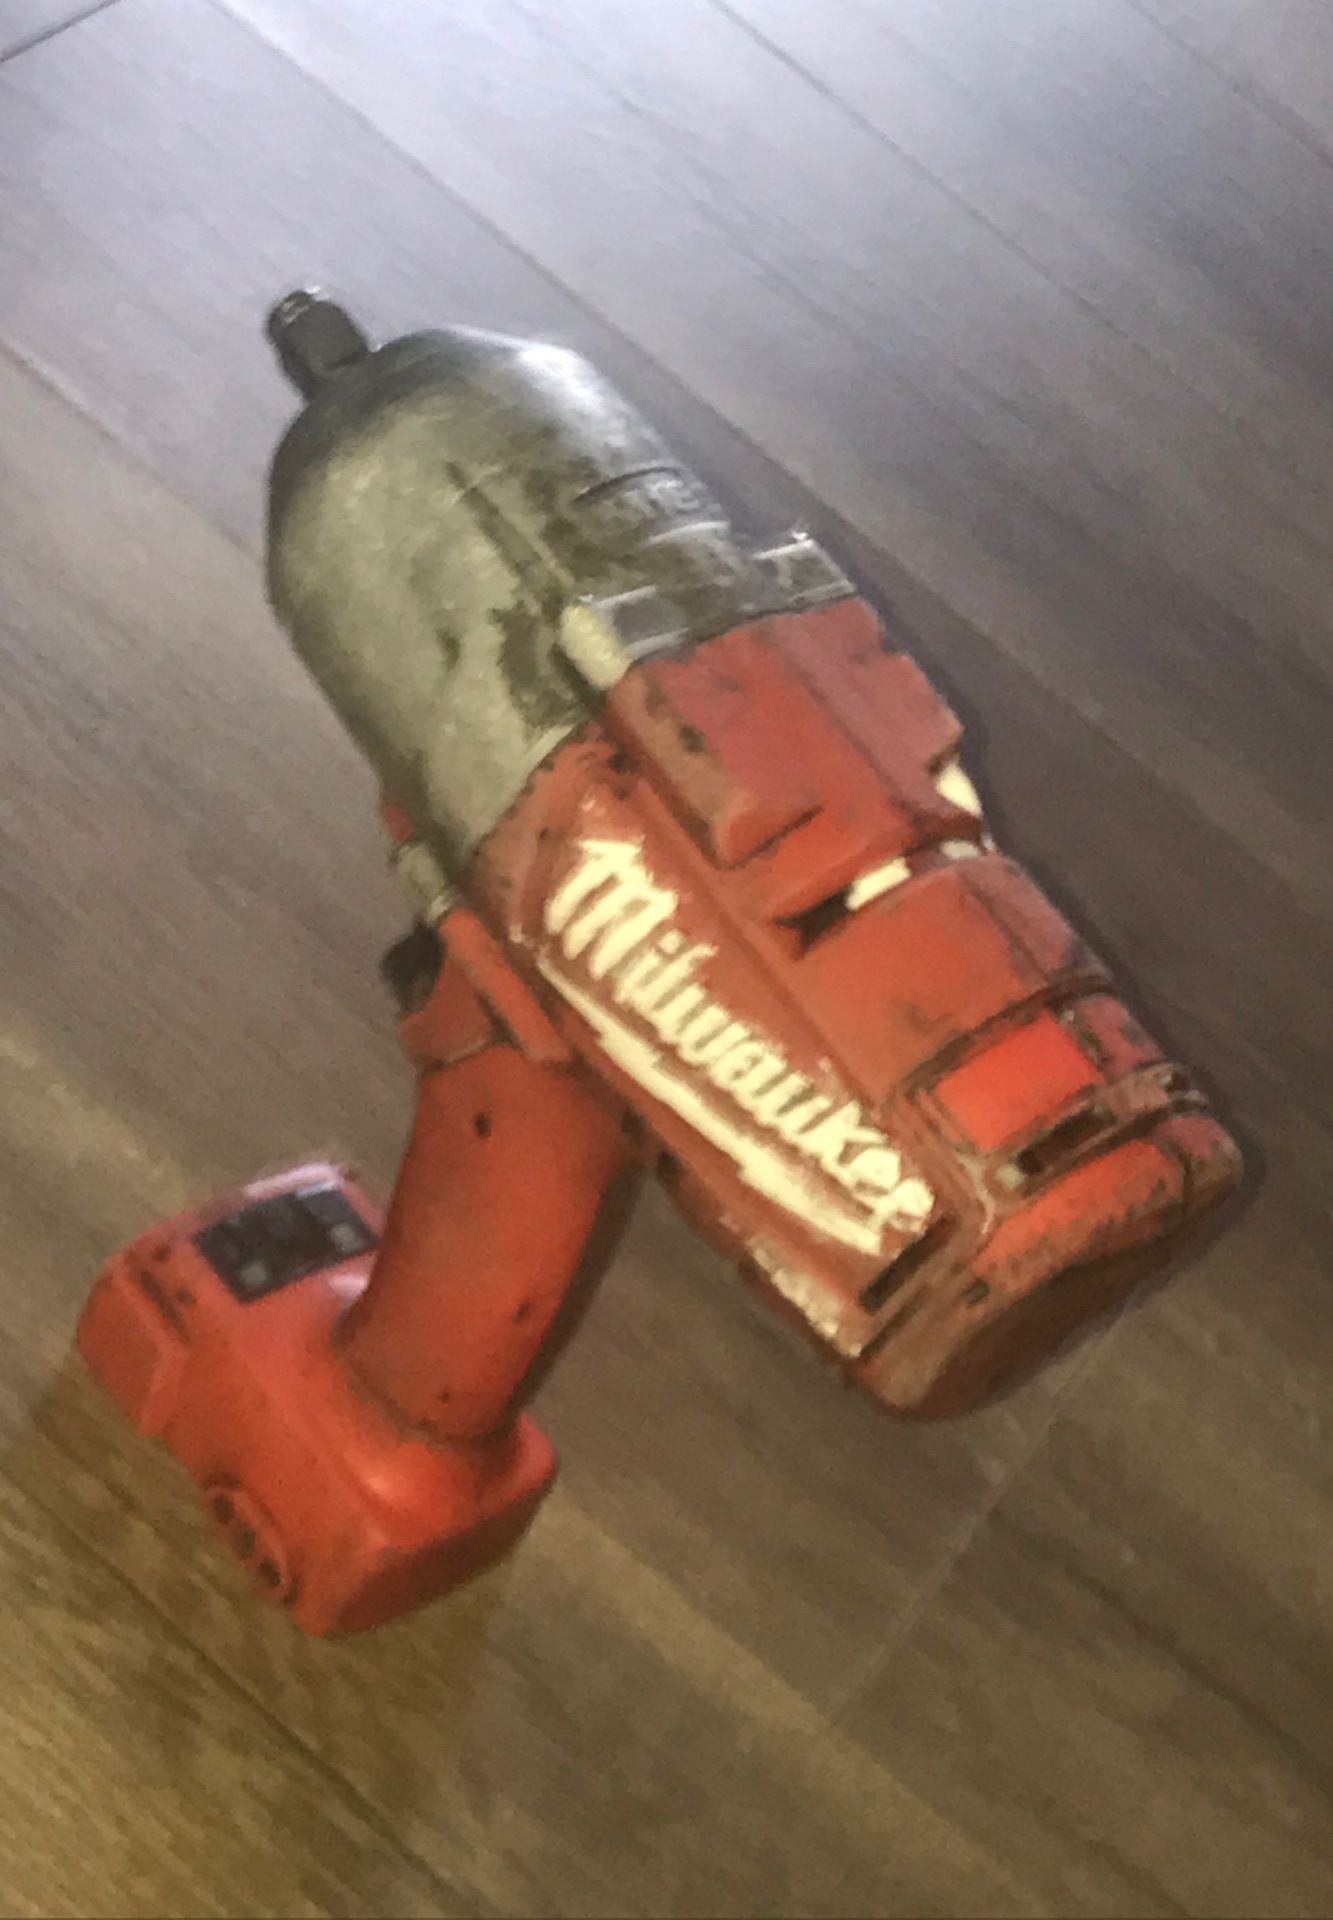 Milwaukee Fuel 1/2 impact wrench